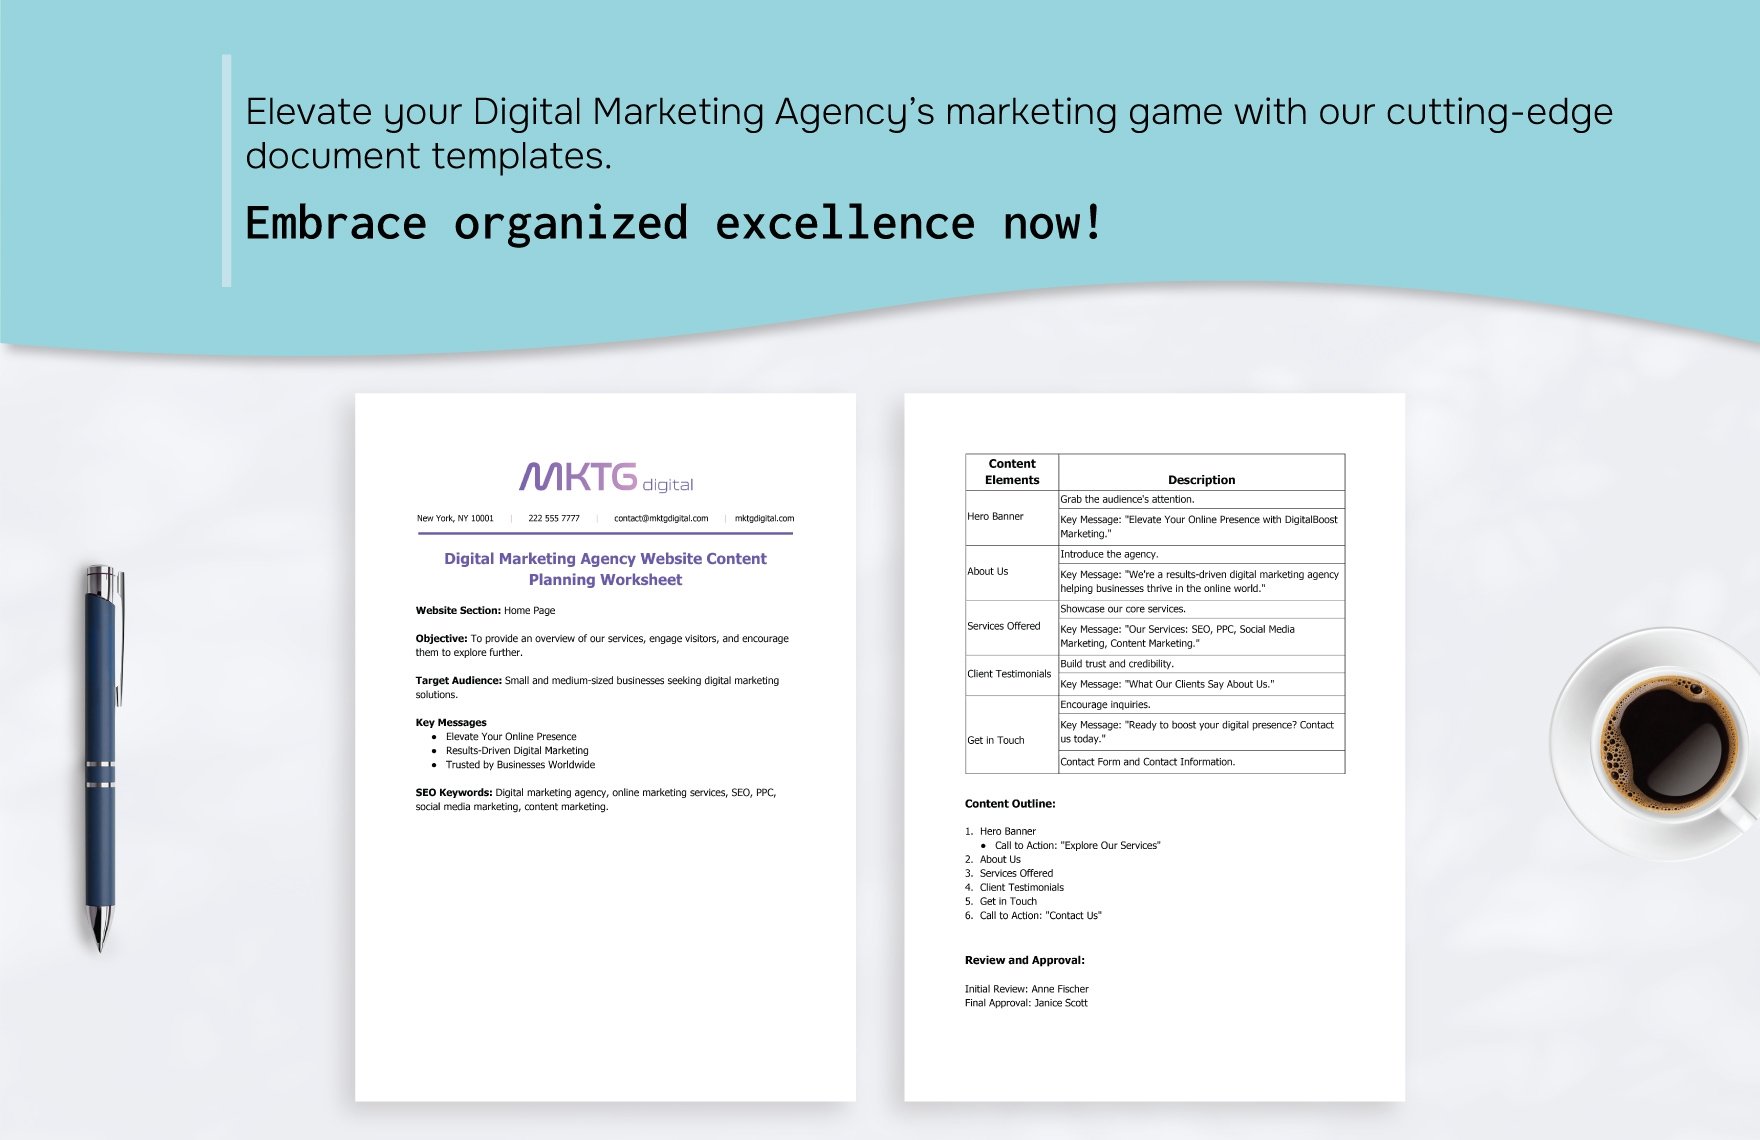 Digital Marketing Agency Website Content Planning Worksheet Template